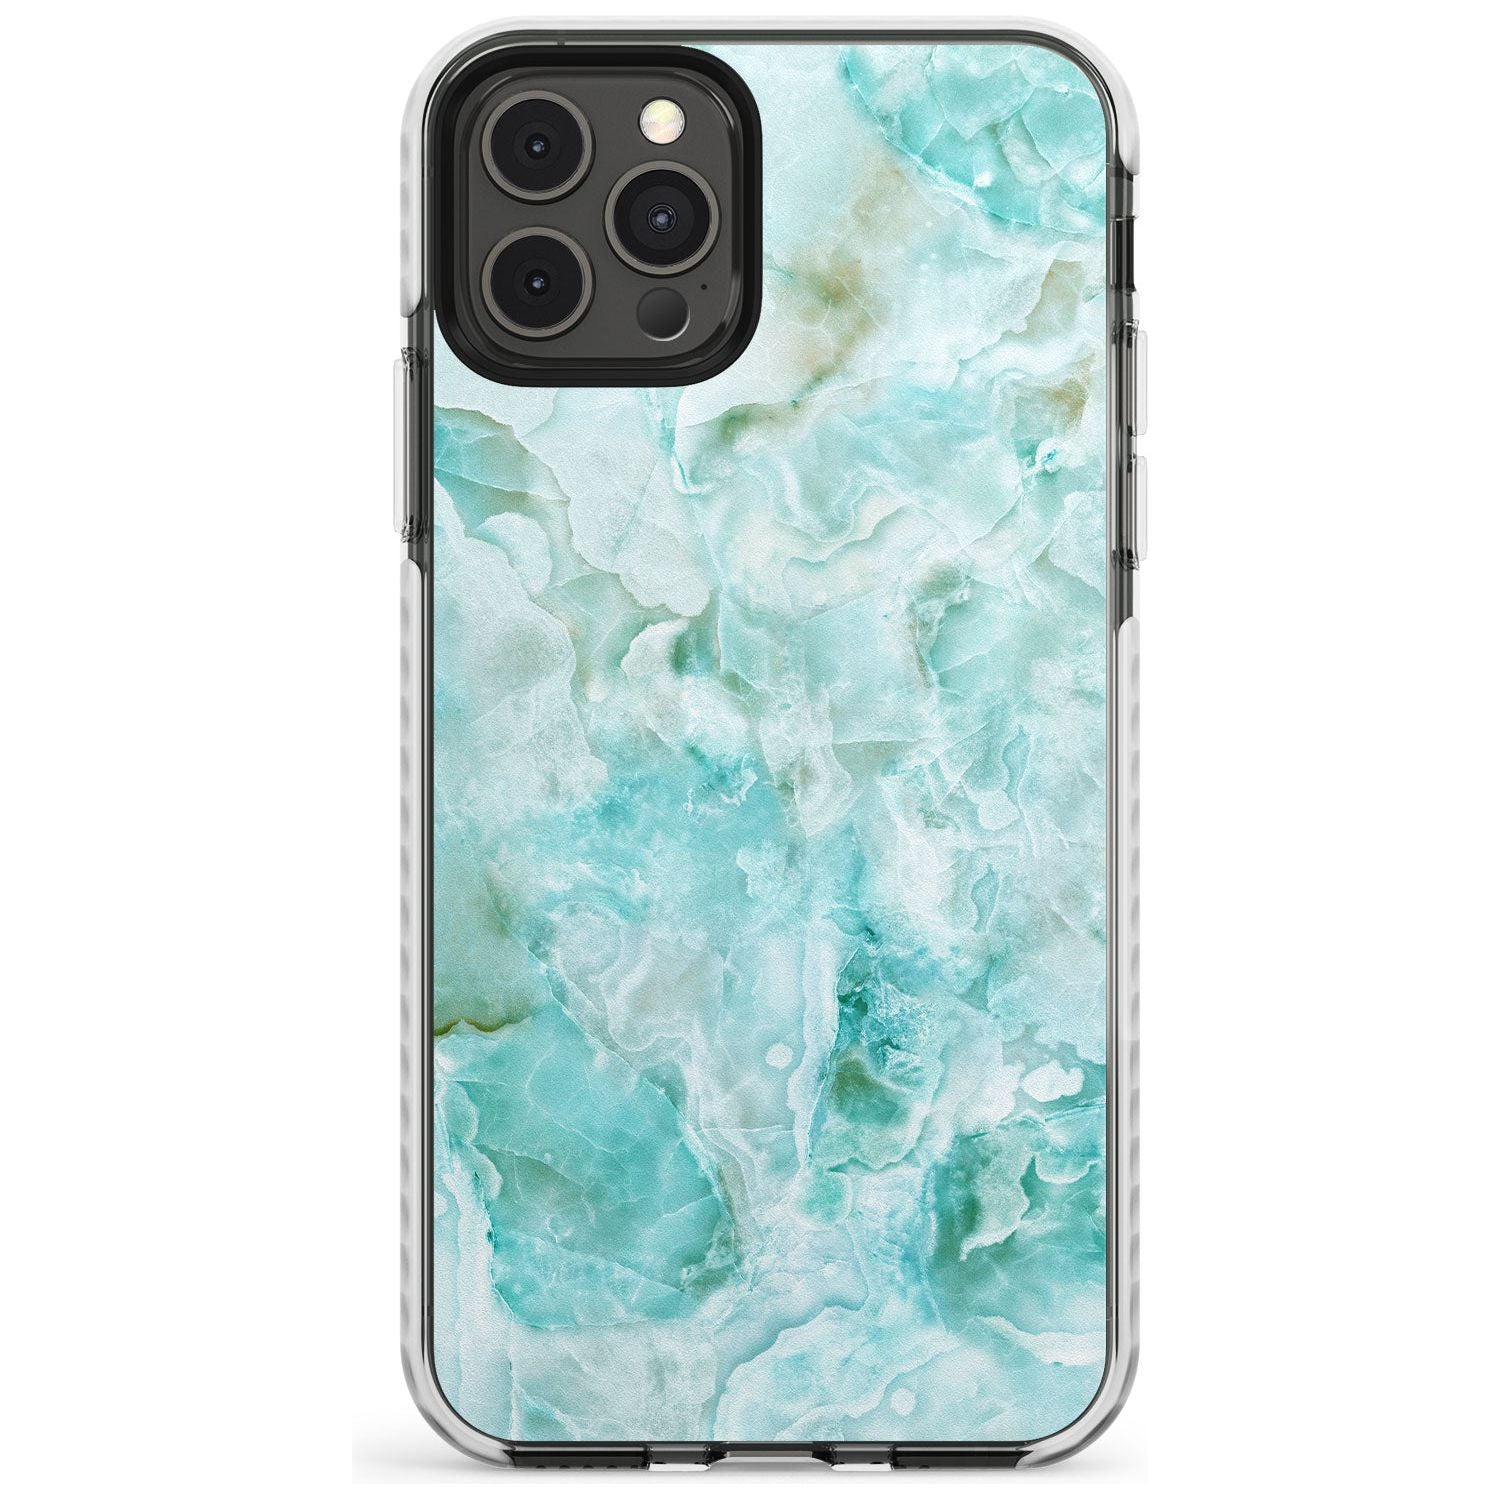 Turquoise Aqua Onyx Marble Slim TPU Phone Case for iPhone 11 Pro Max